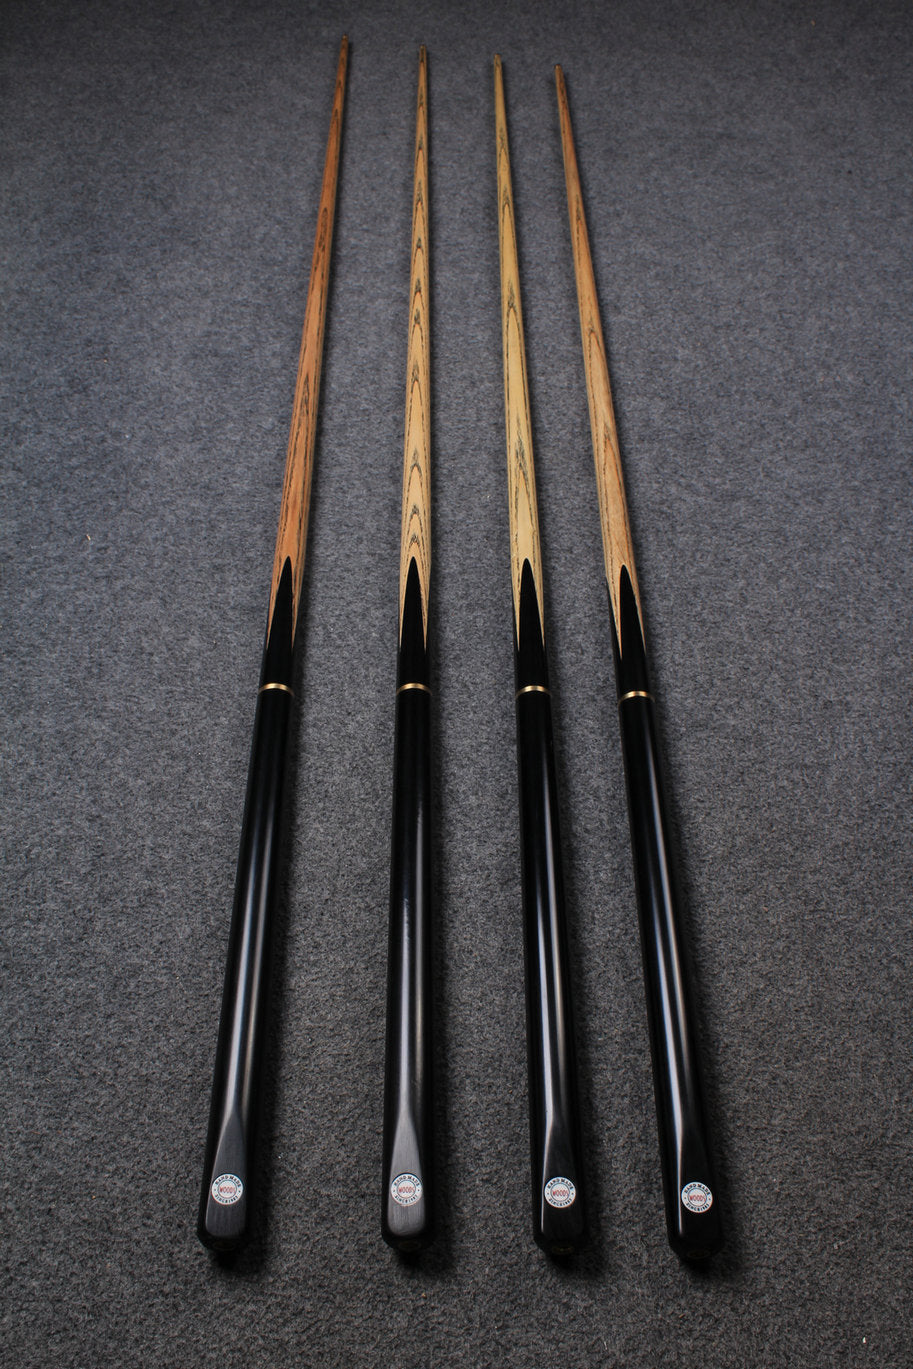 3/4 handmade ash 8 ball pool cue - variant length , variant tip size